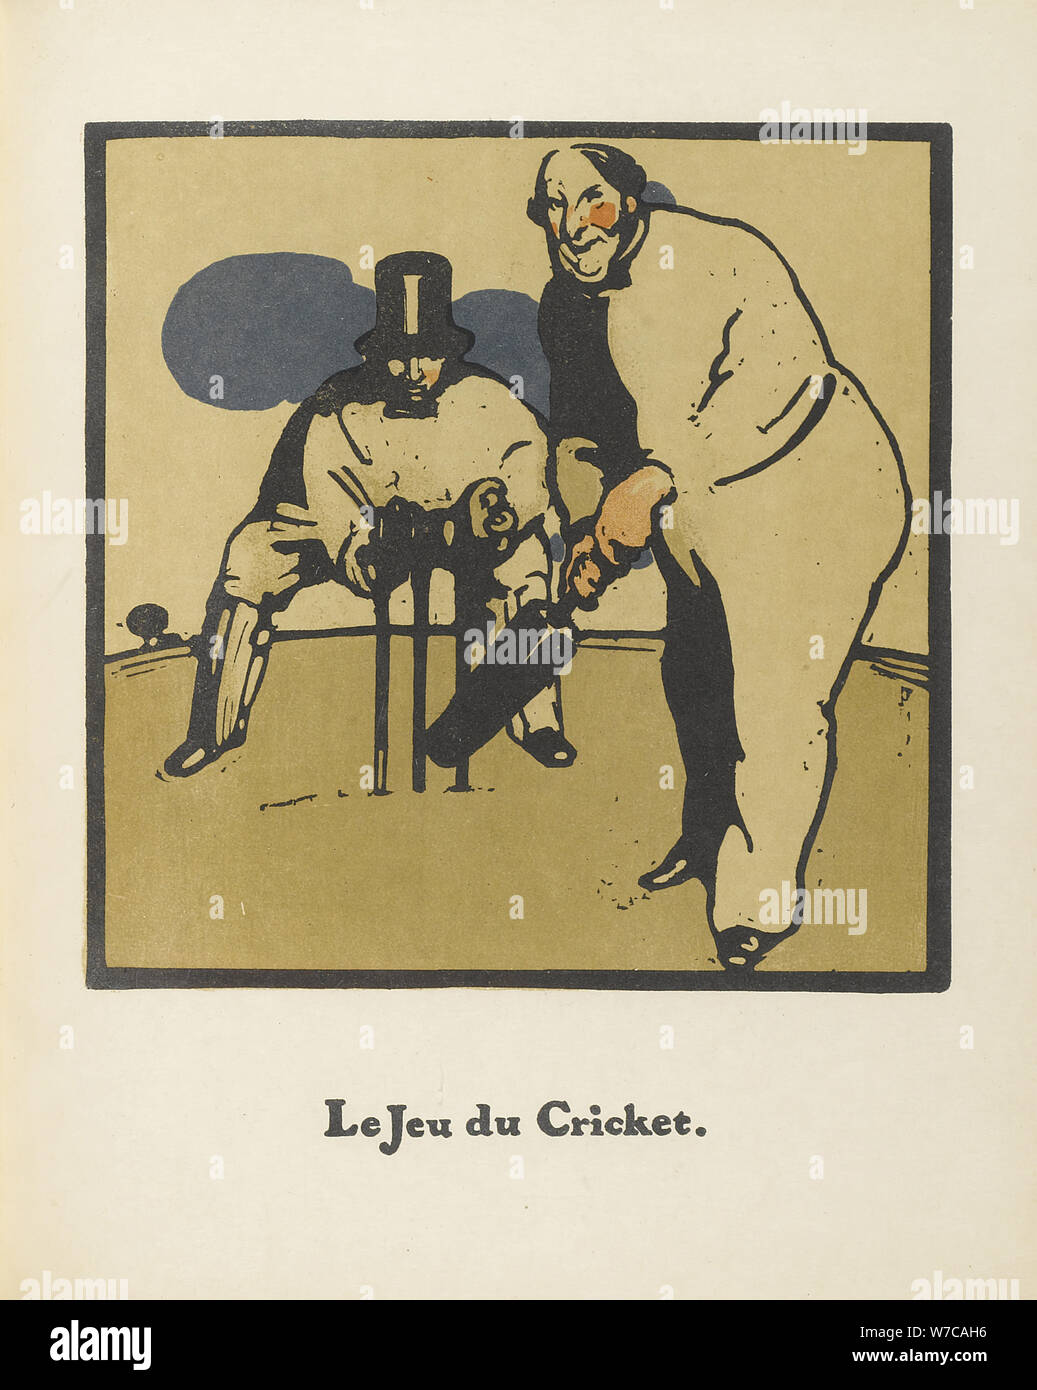 Cricket Game. From Almanach de Douze Sports, 1898. Artist: Nicholson, Sir William (1872-1949) Stock Photo